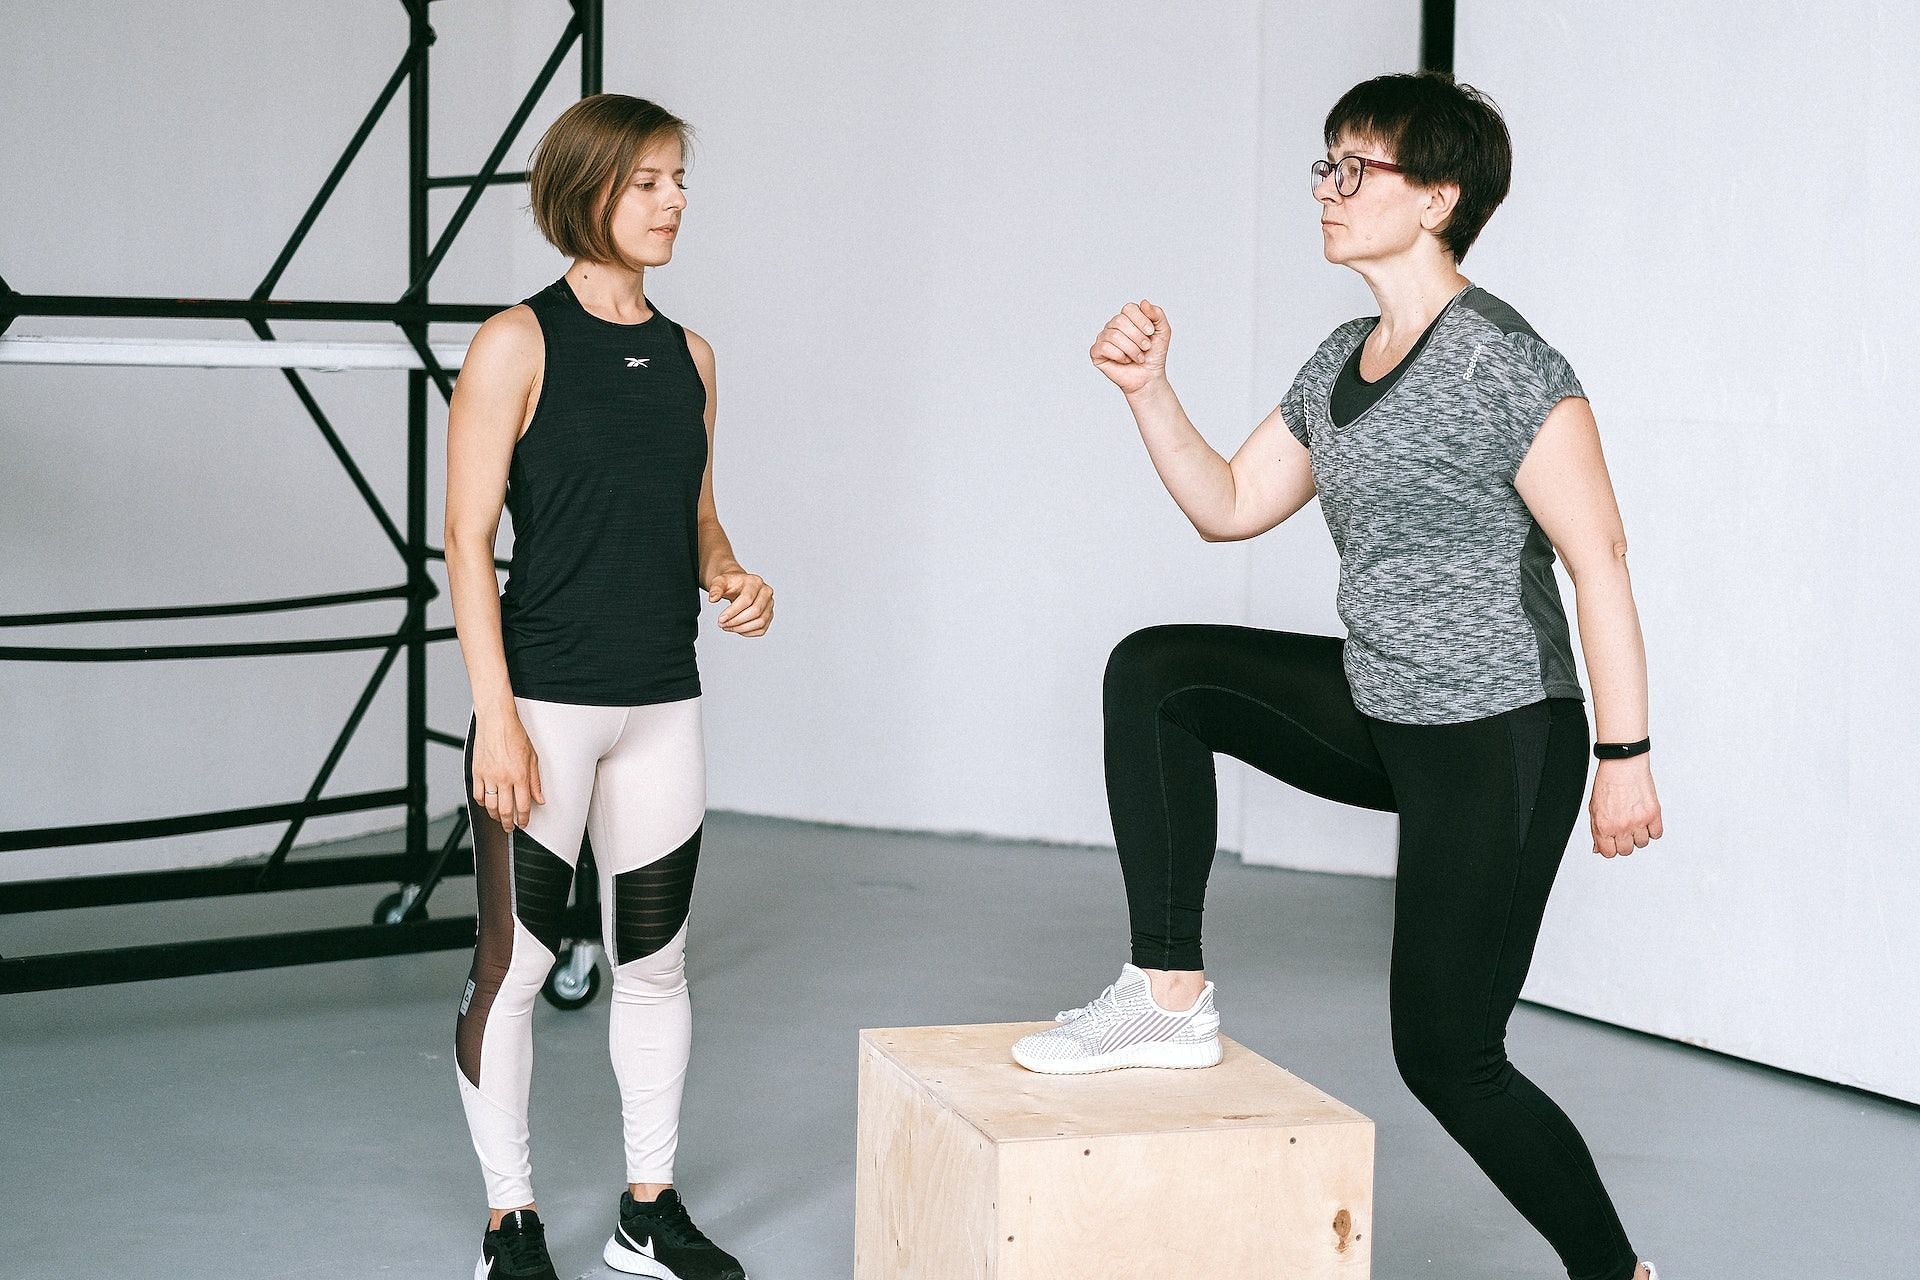 Step-ups involve hip flexion and knee extension. (Photo via Pexels/Anna Shvets)